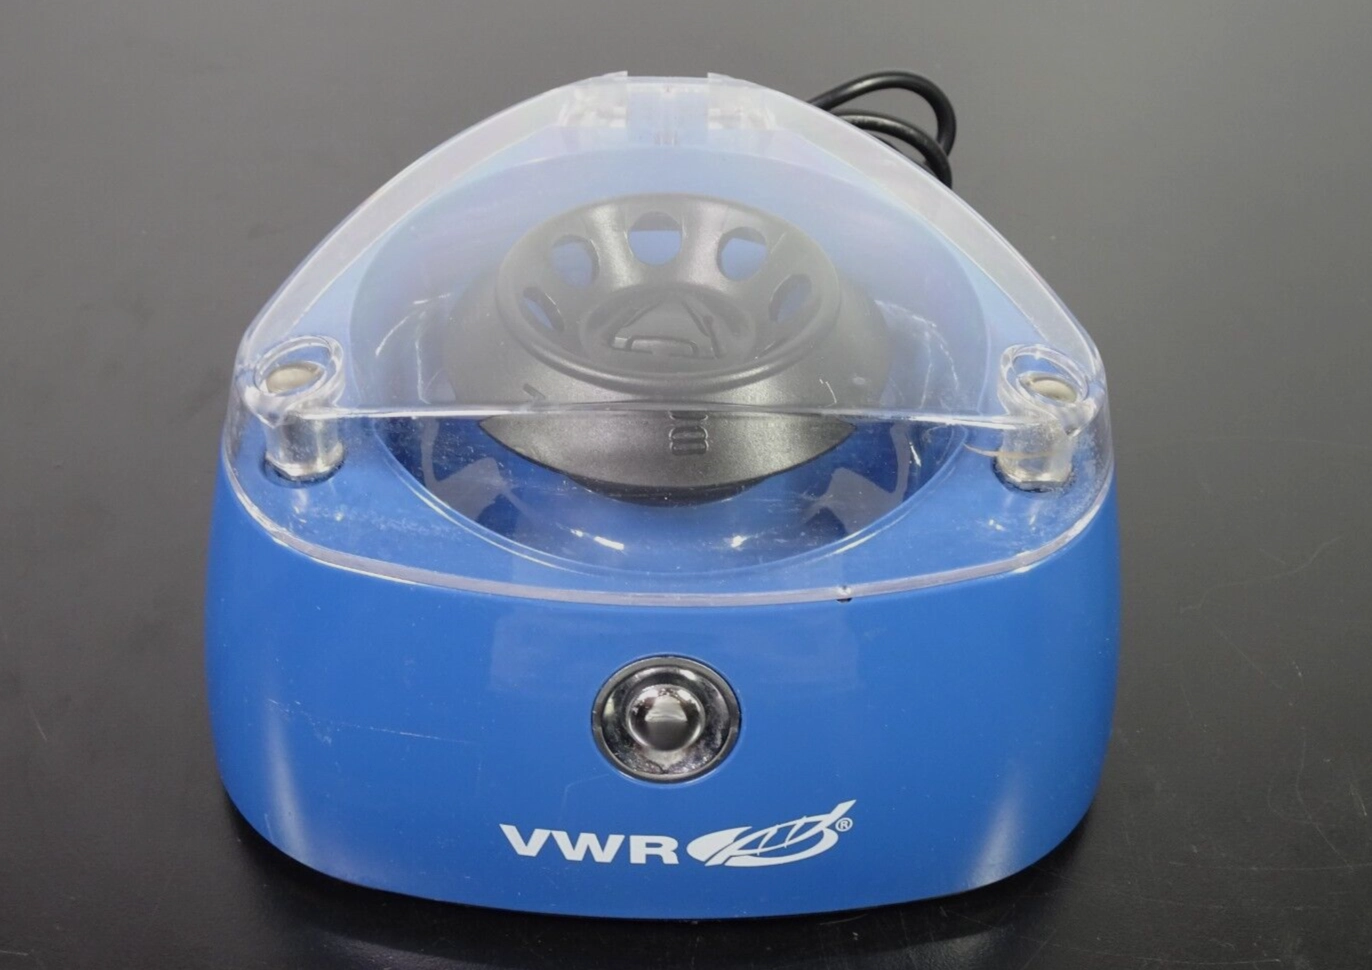 VWR 2017052014 Mini Centrifuge